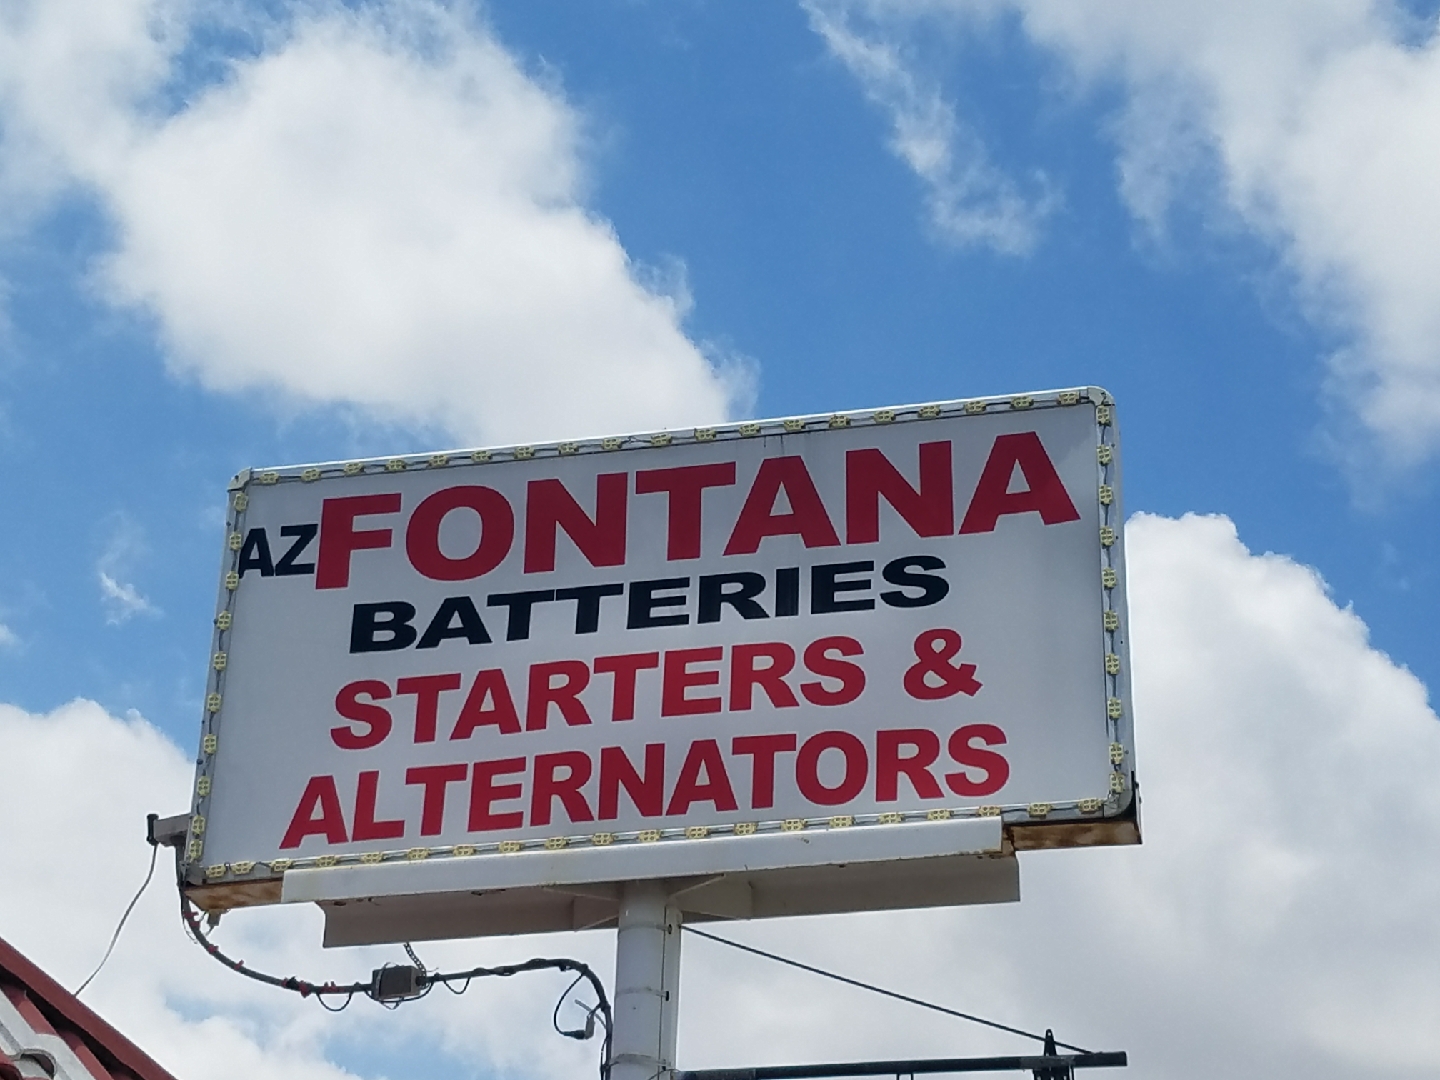 Fontana Alternators, Starters & Batteries